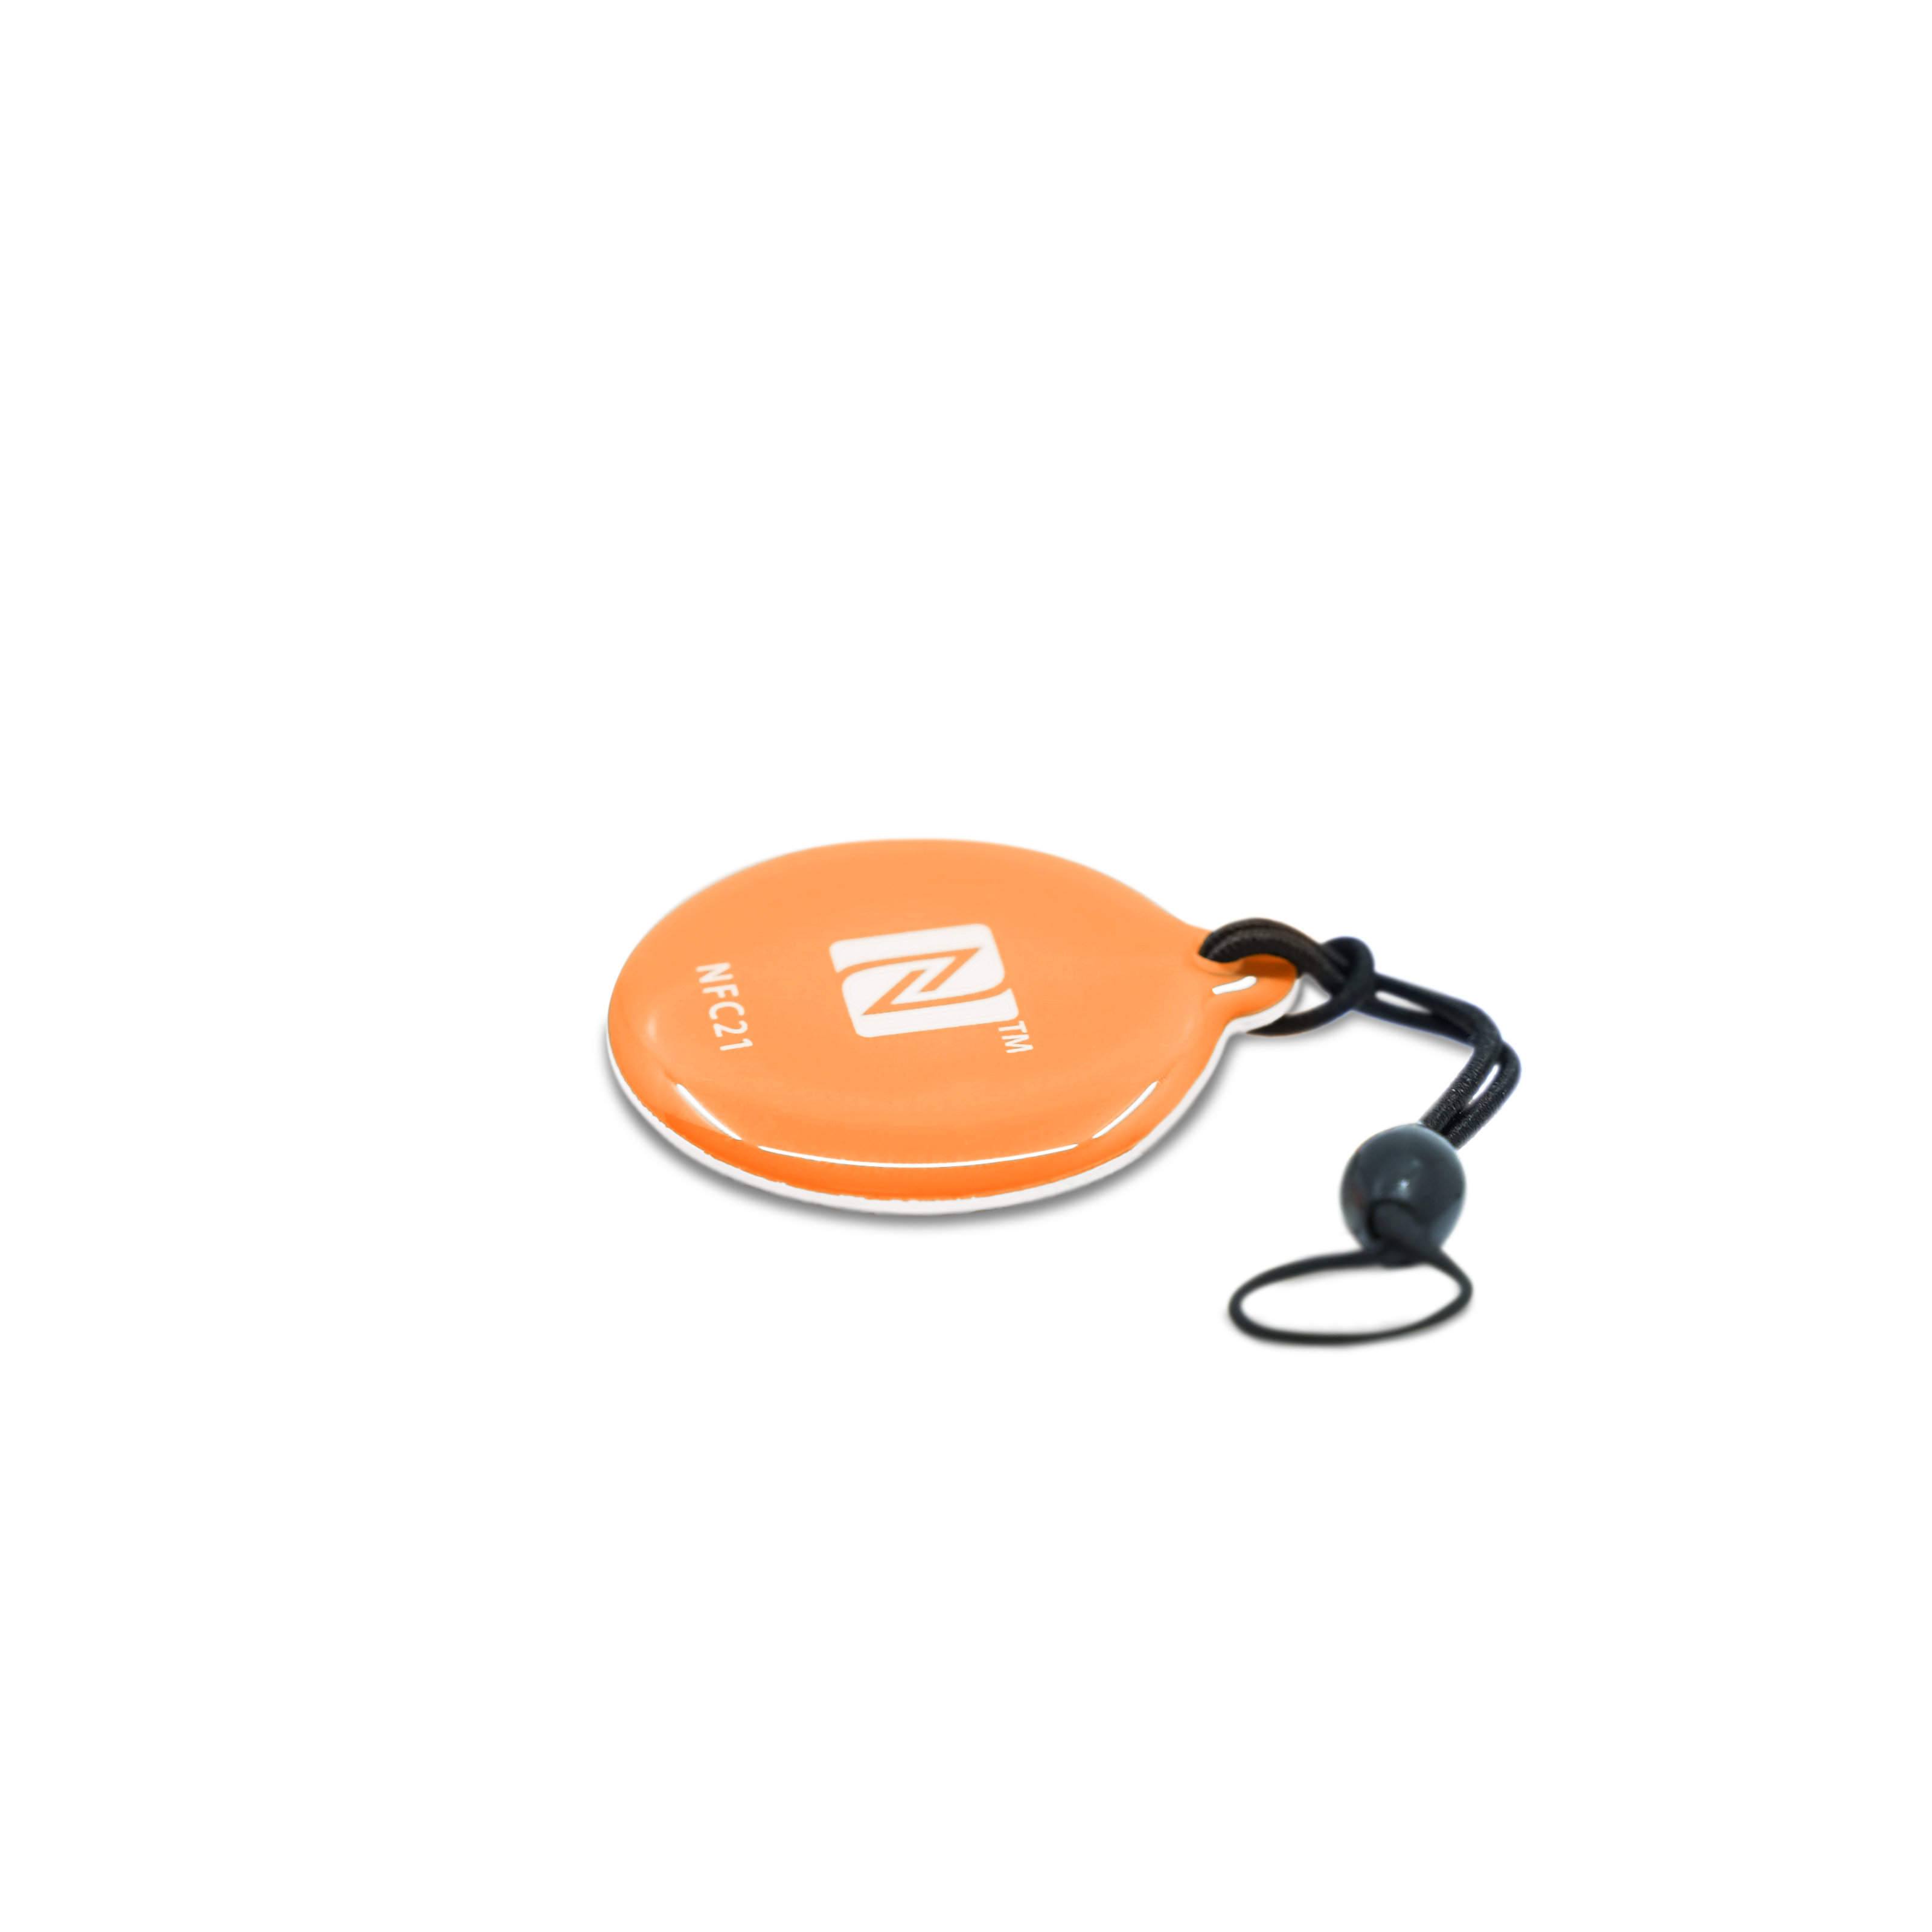 NFC Anhänger Epoxy - 30 mm - NTAG216 - 924 Byte - orange